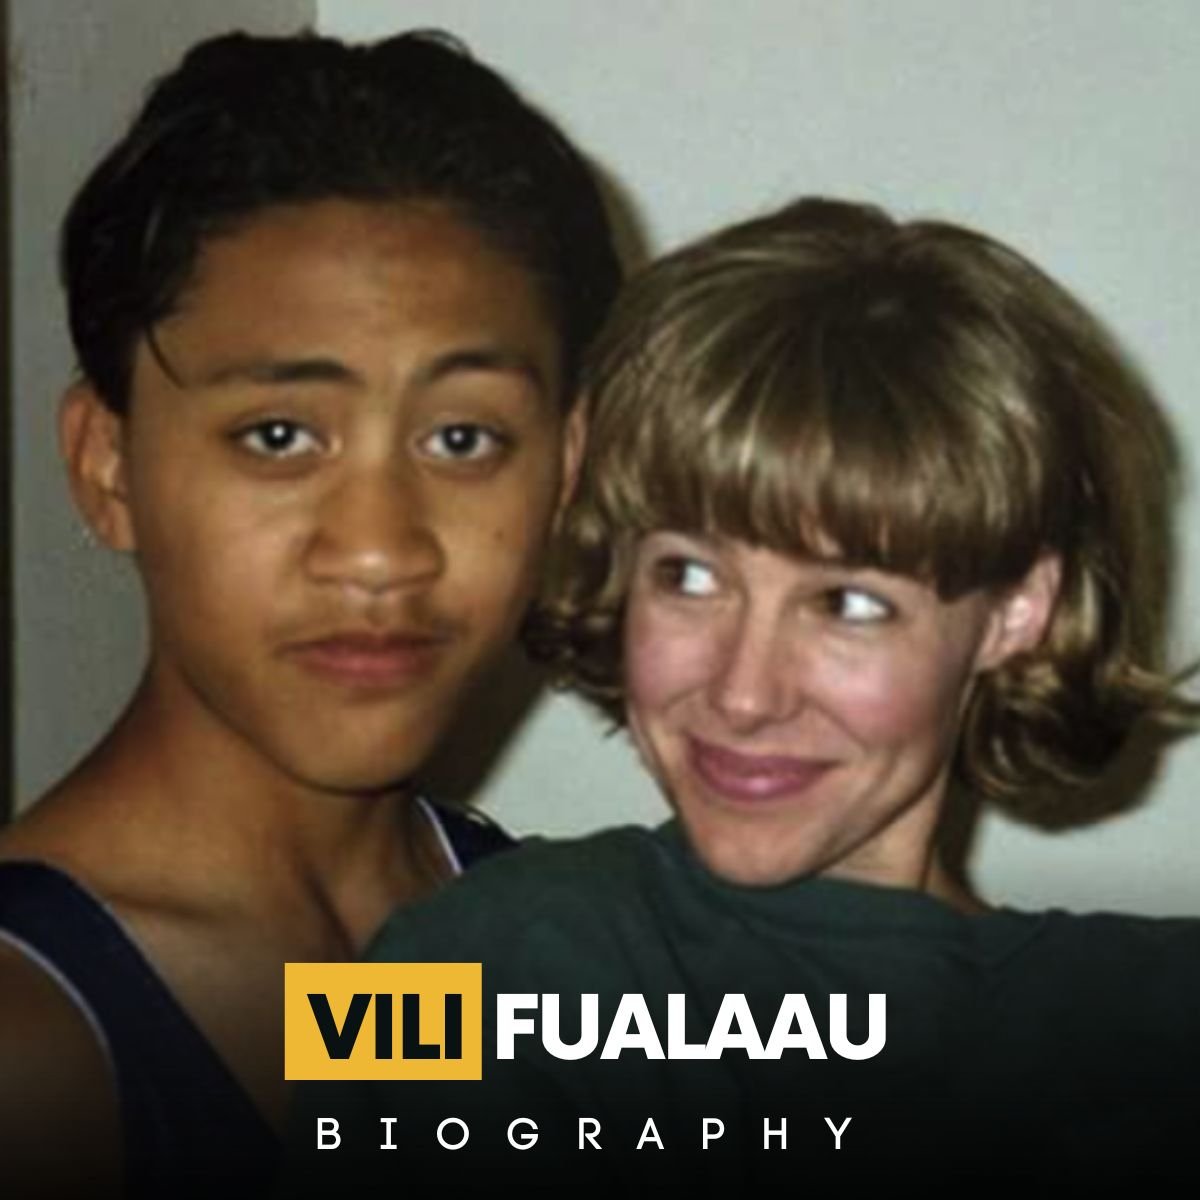 Vili Fualaau Biography